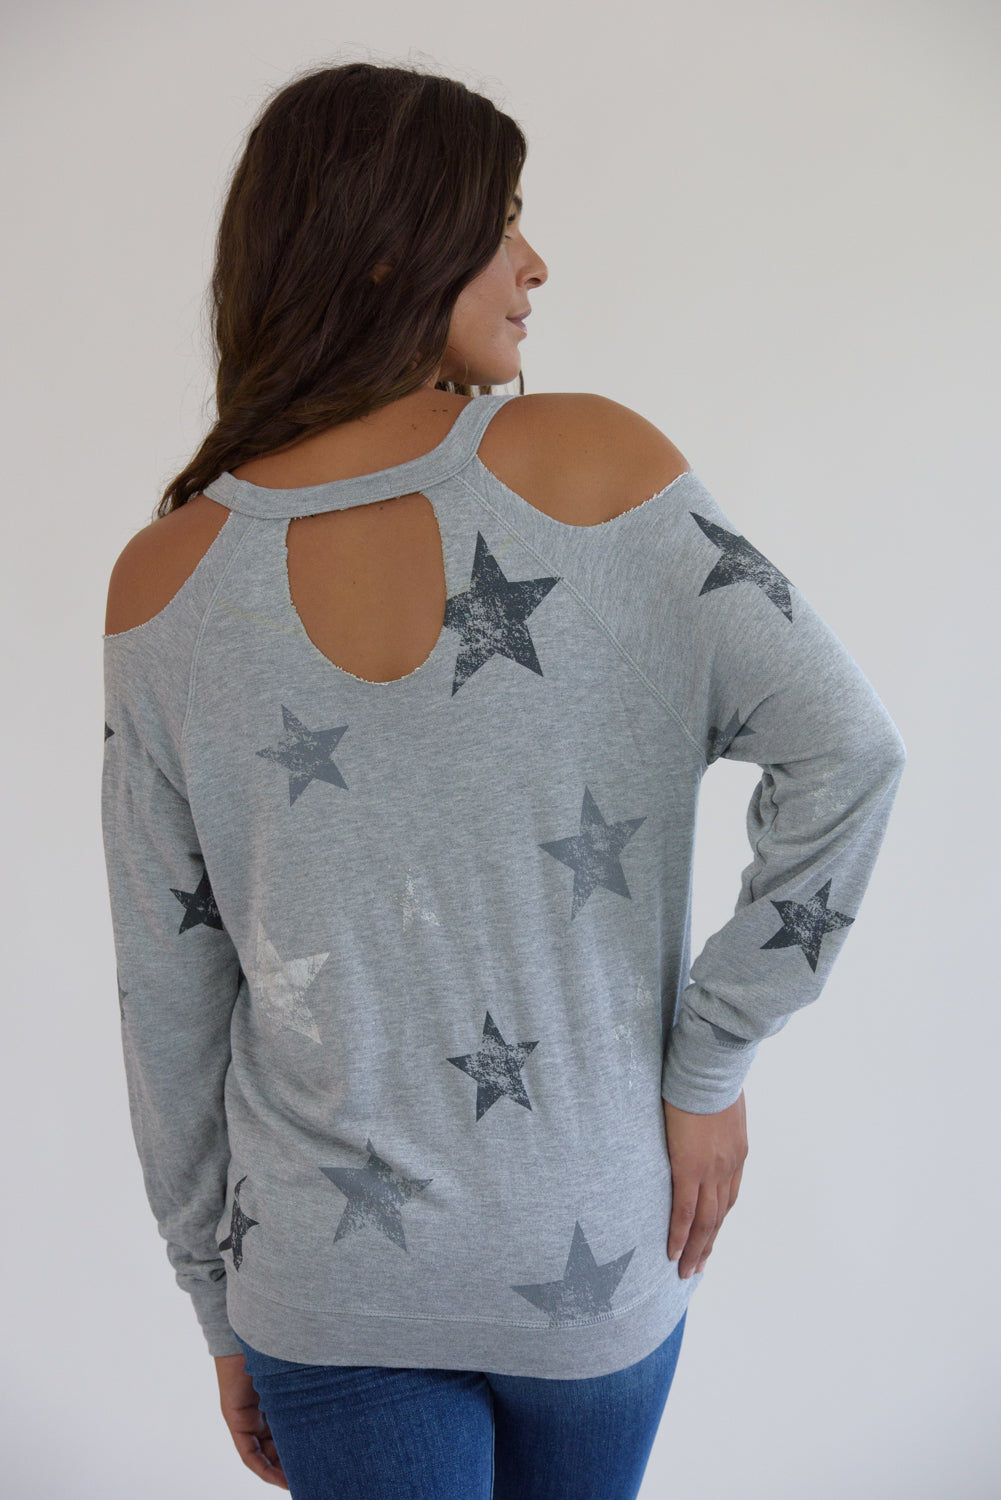 Heather Grey Cold Shoulder Stars Sweatshirt